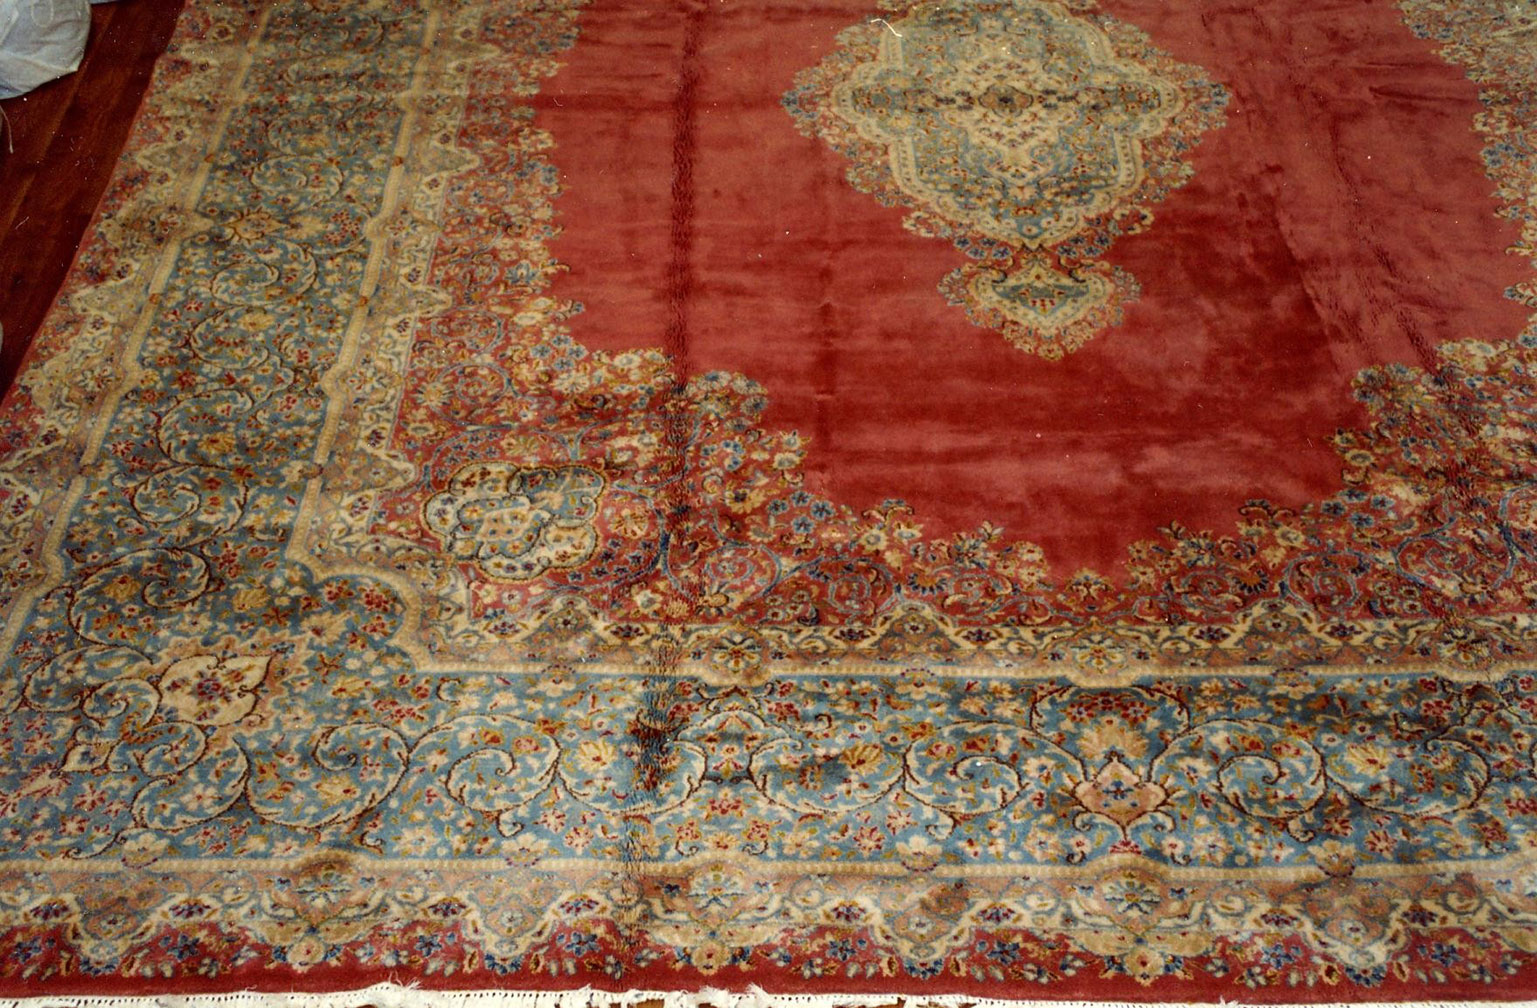 Vintage kirman Carpet - # 52511